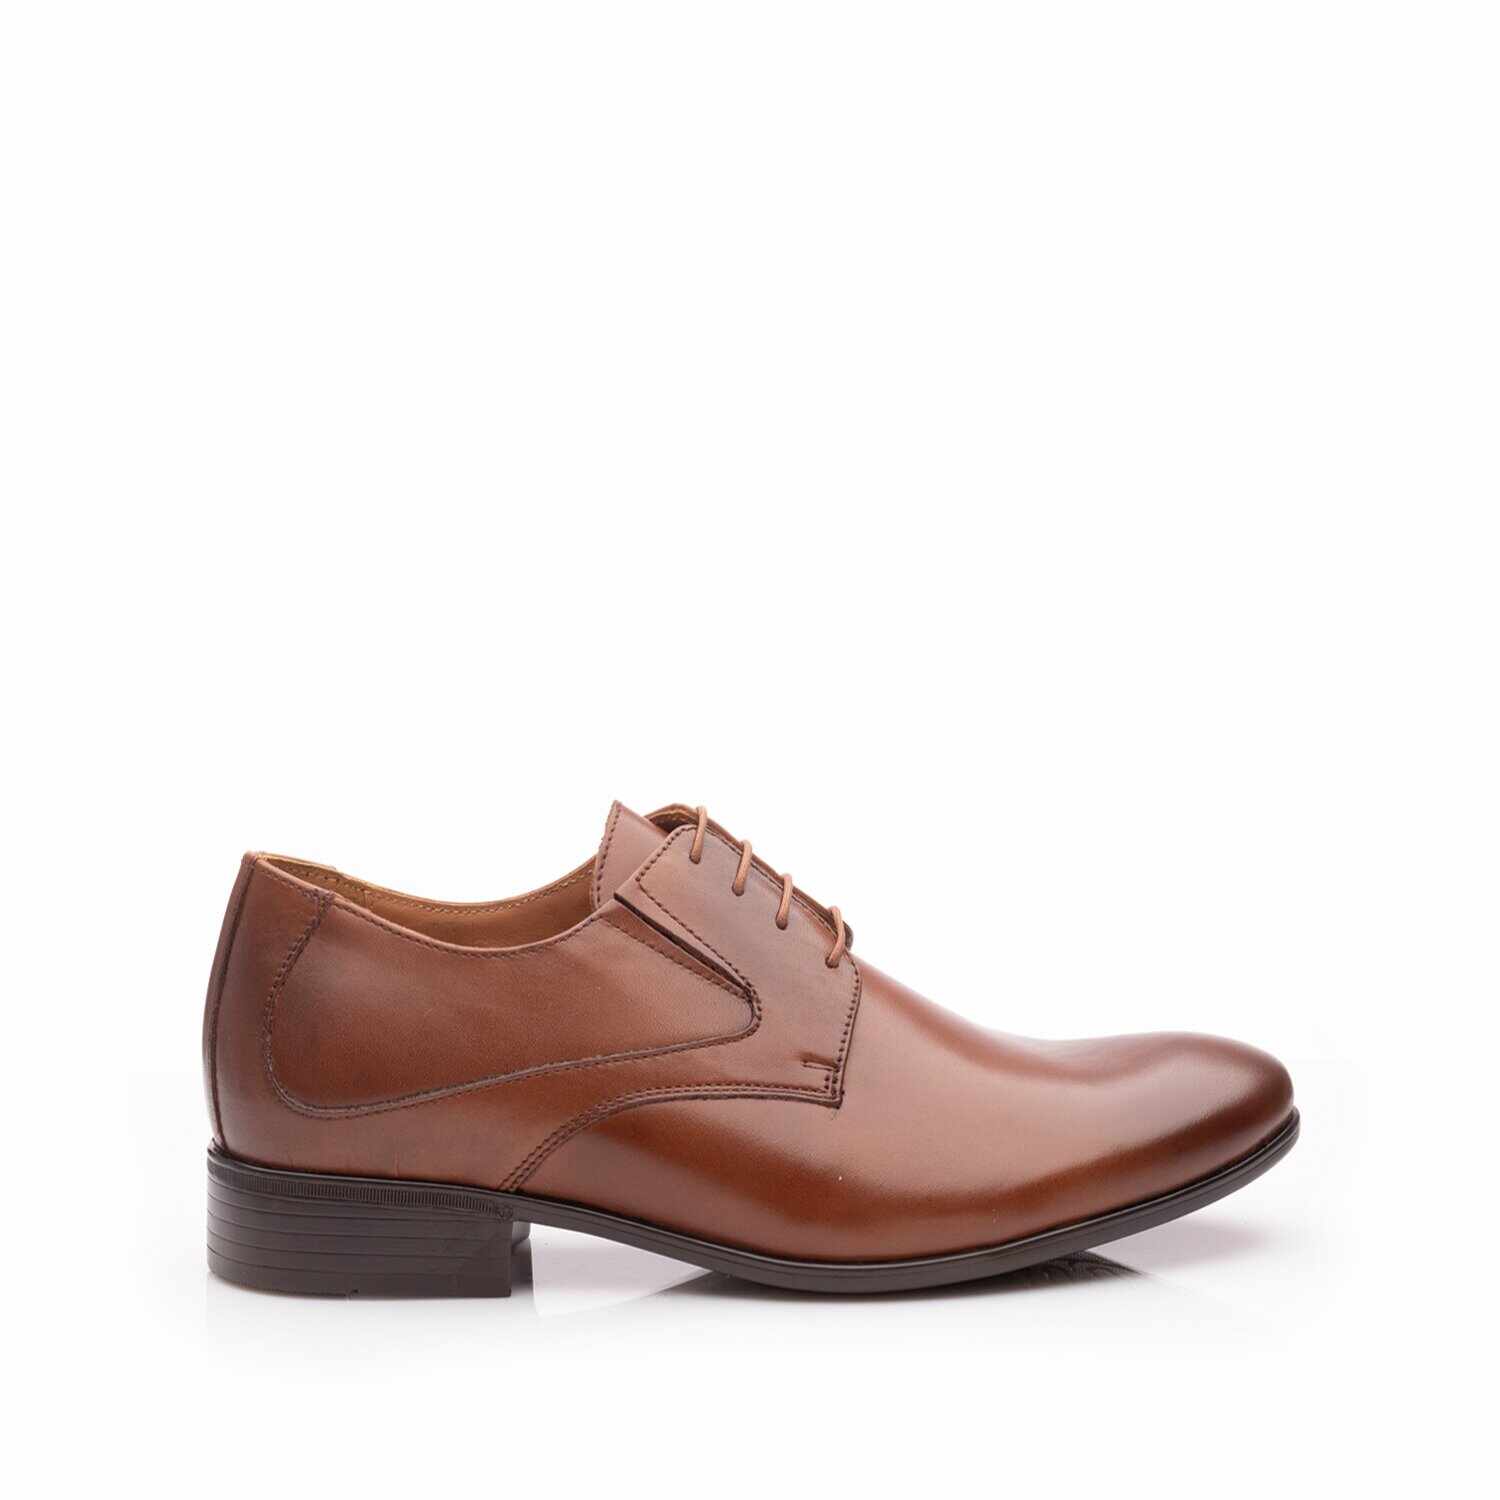 Pantofi eleganti barbati din piele naturala,Leofex - 690 Cognac box